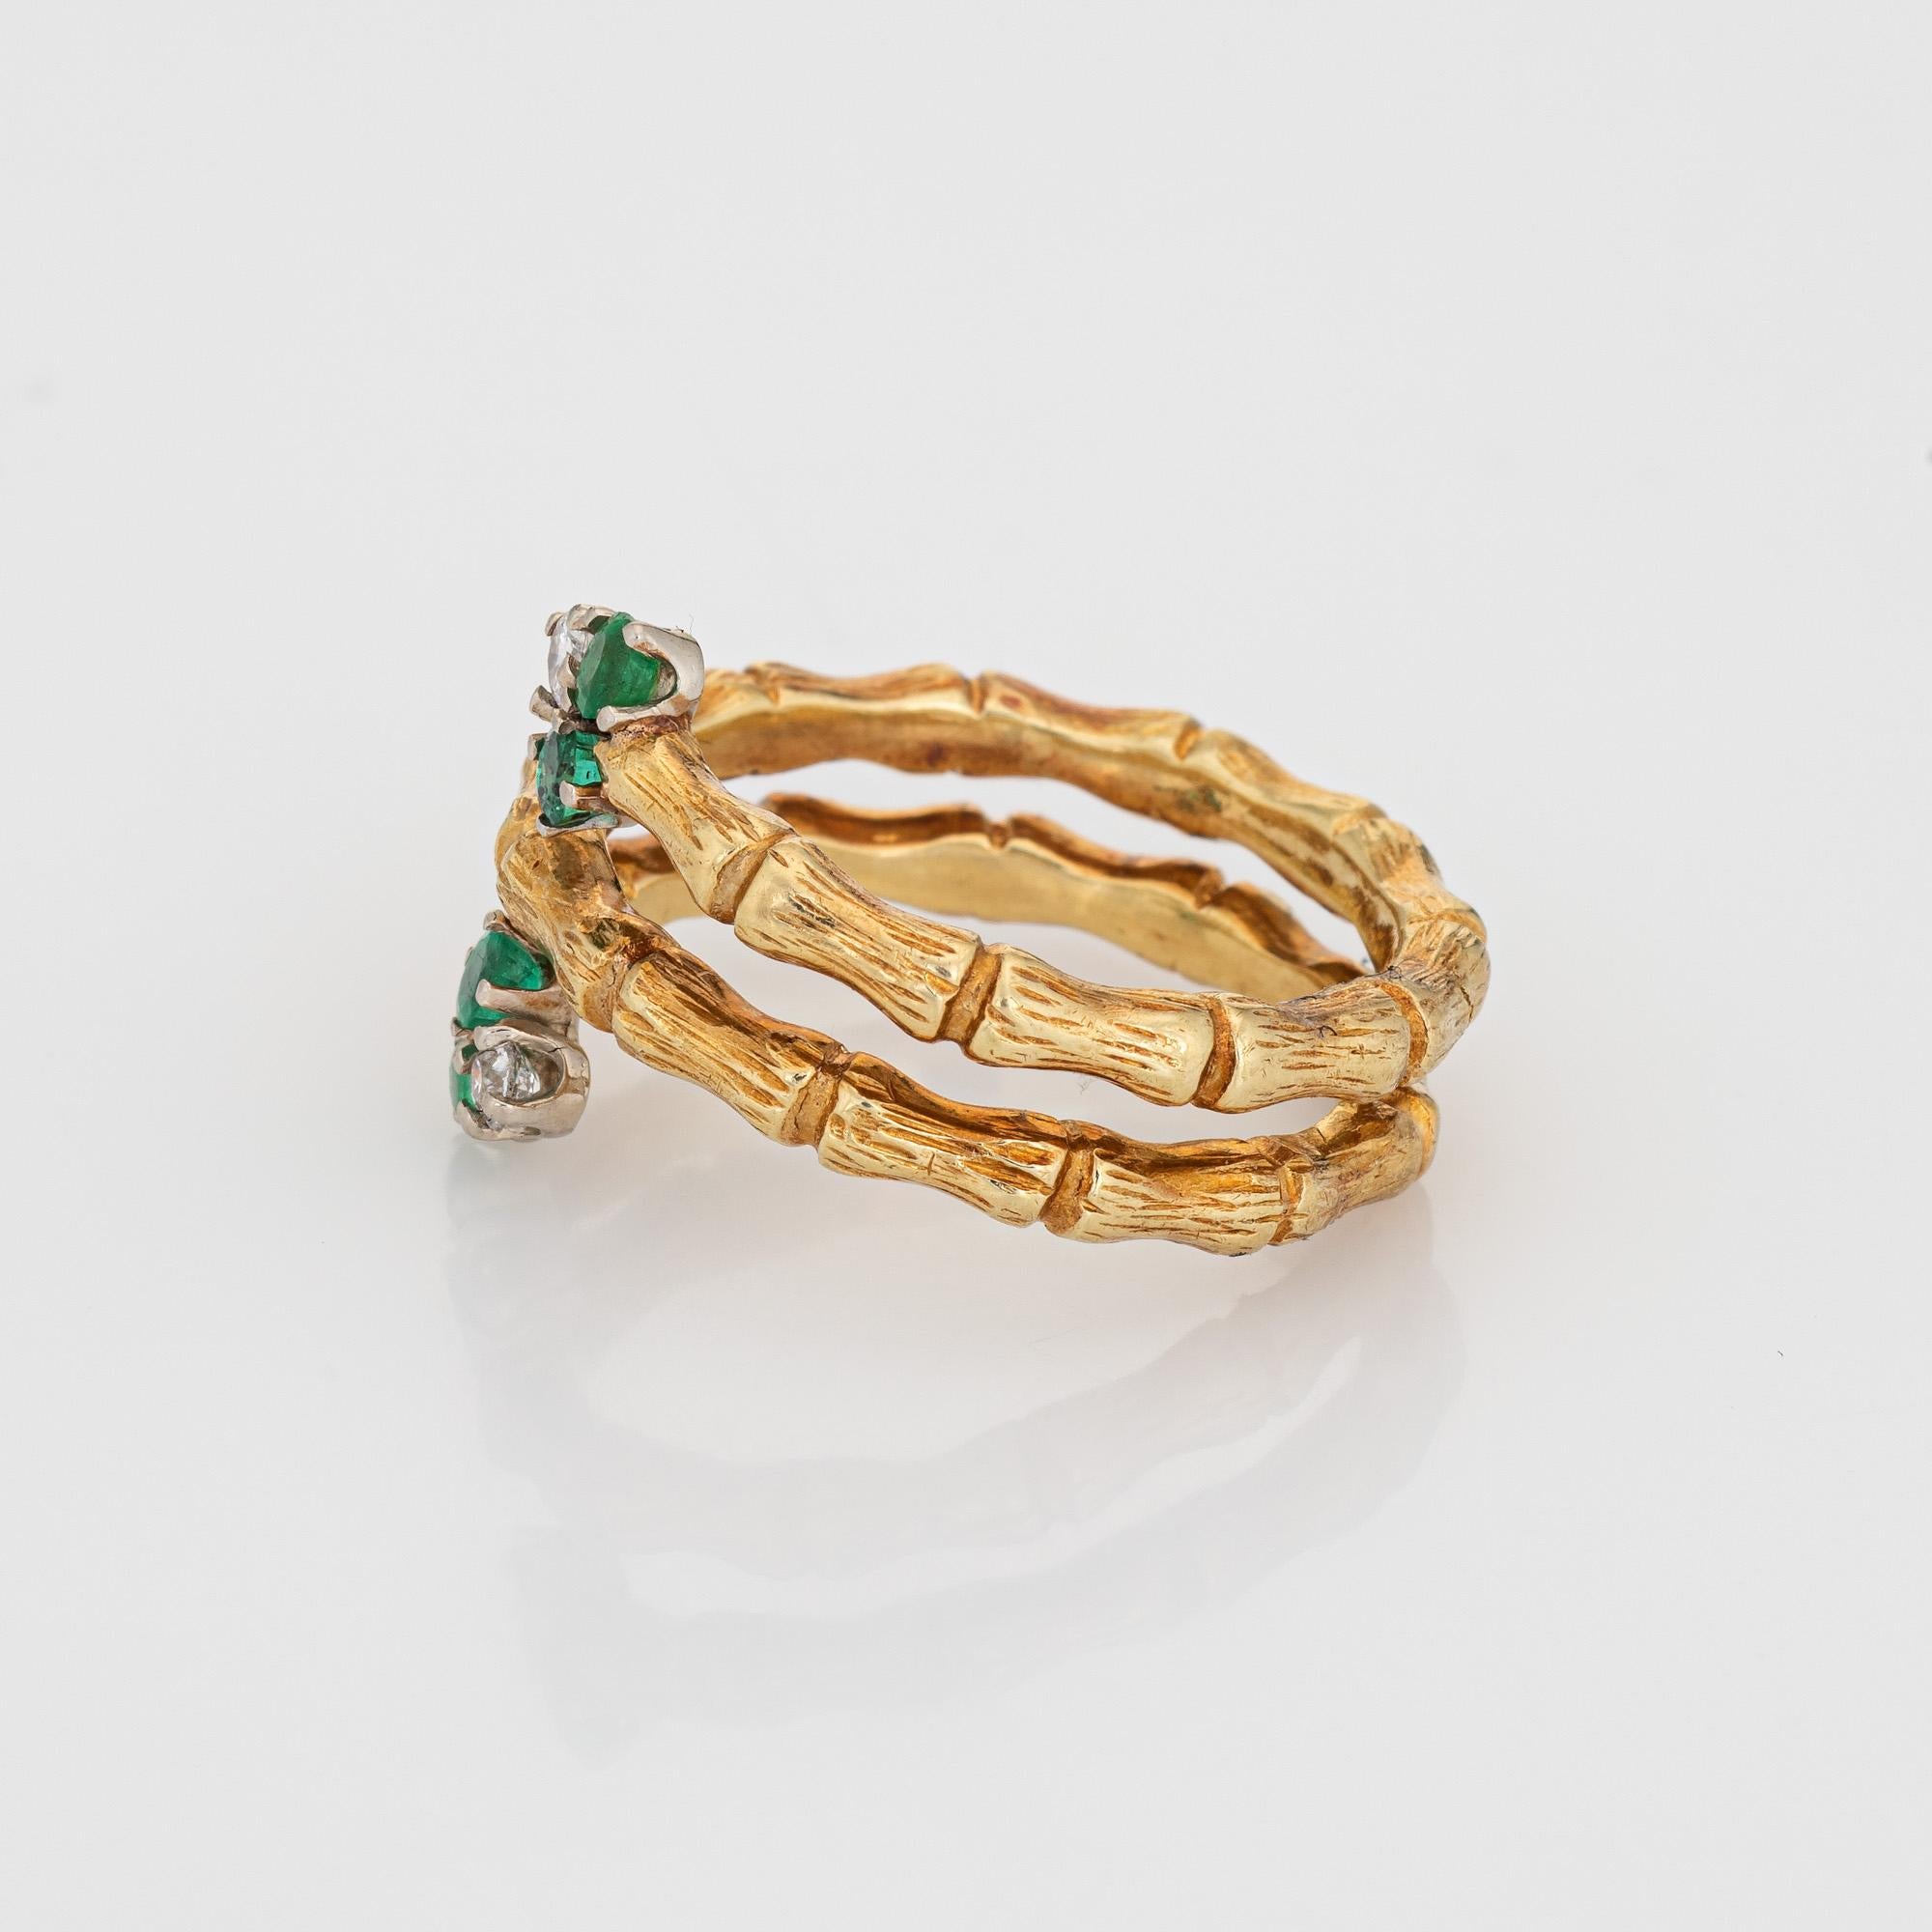 Round Cut Diamond Emerald Bamboo Ring Vintage 18k Yellow Gold Bypass Band Jewelry